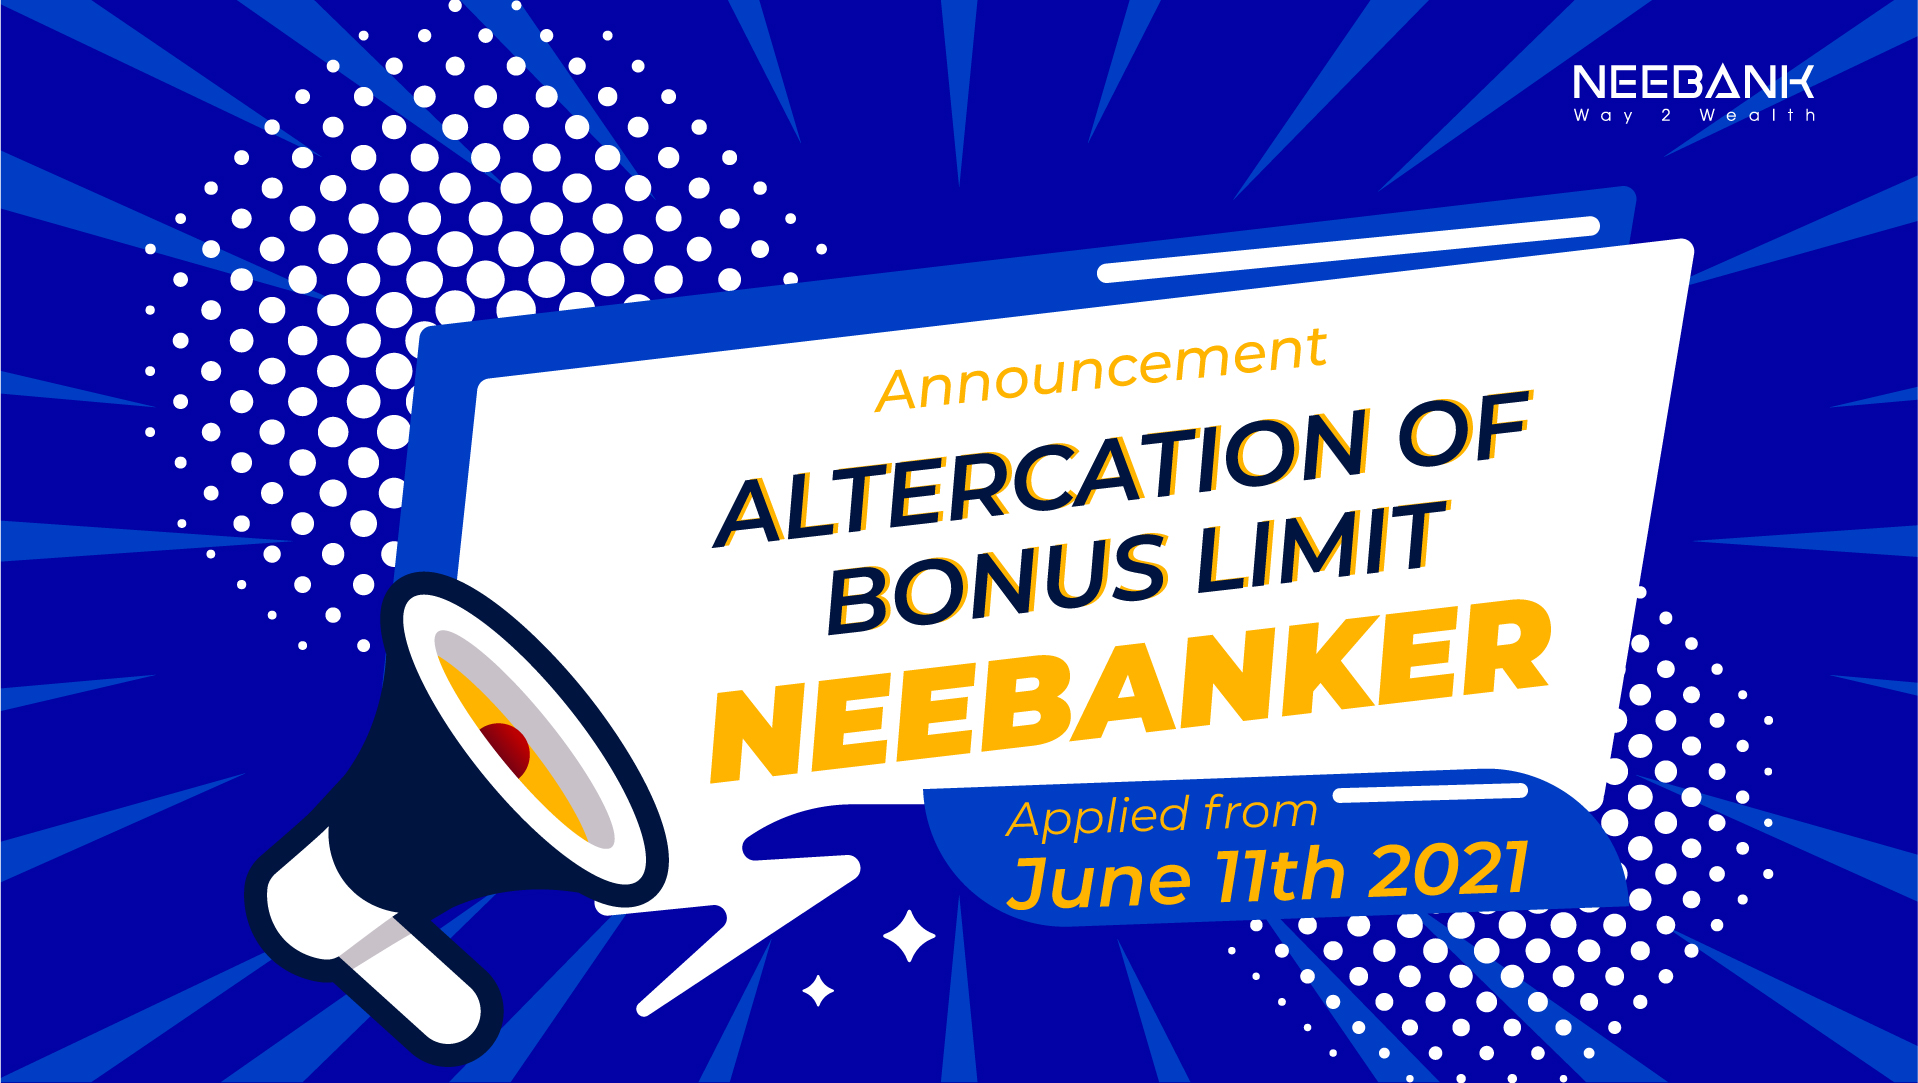 New bonus limits from June 11th, 2021